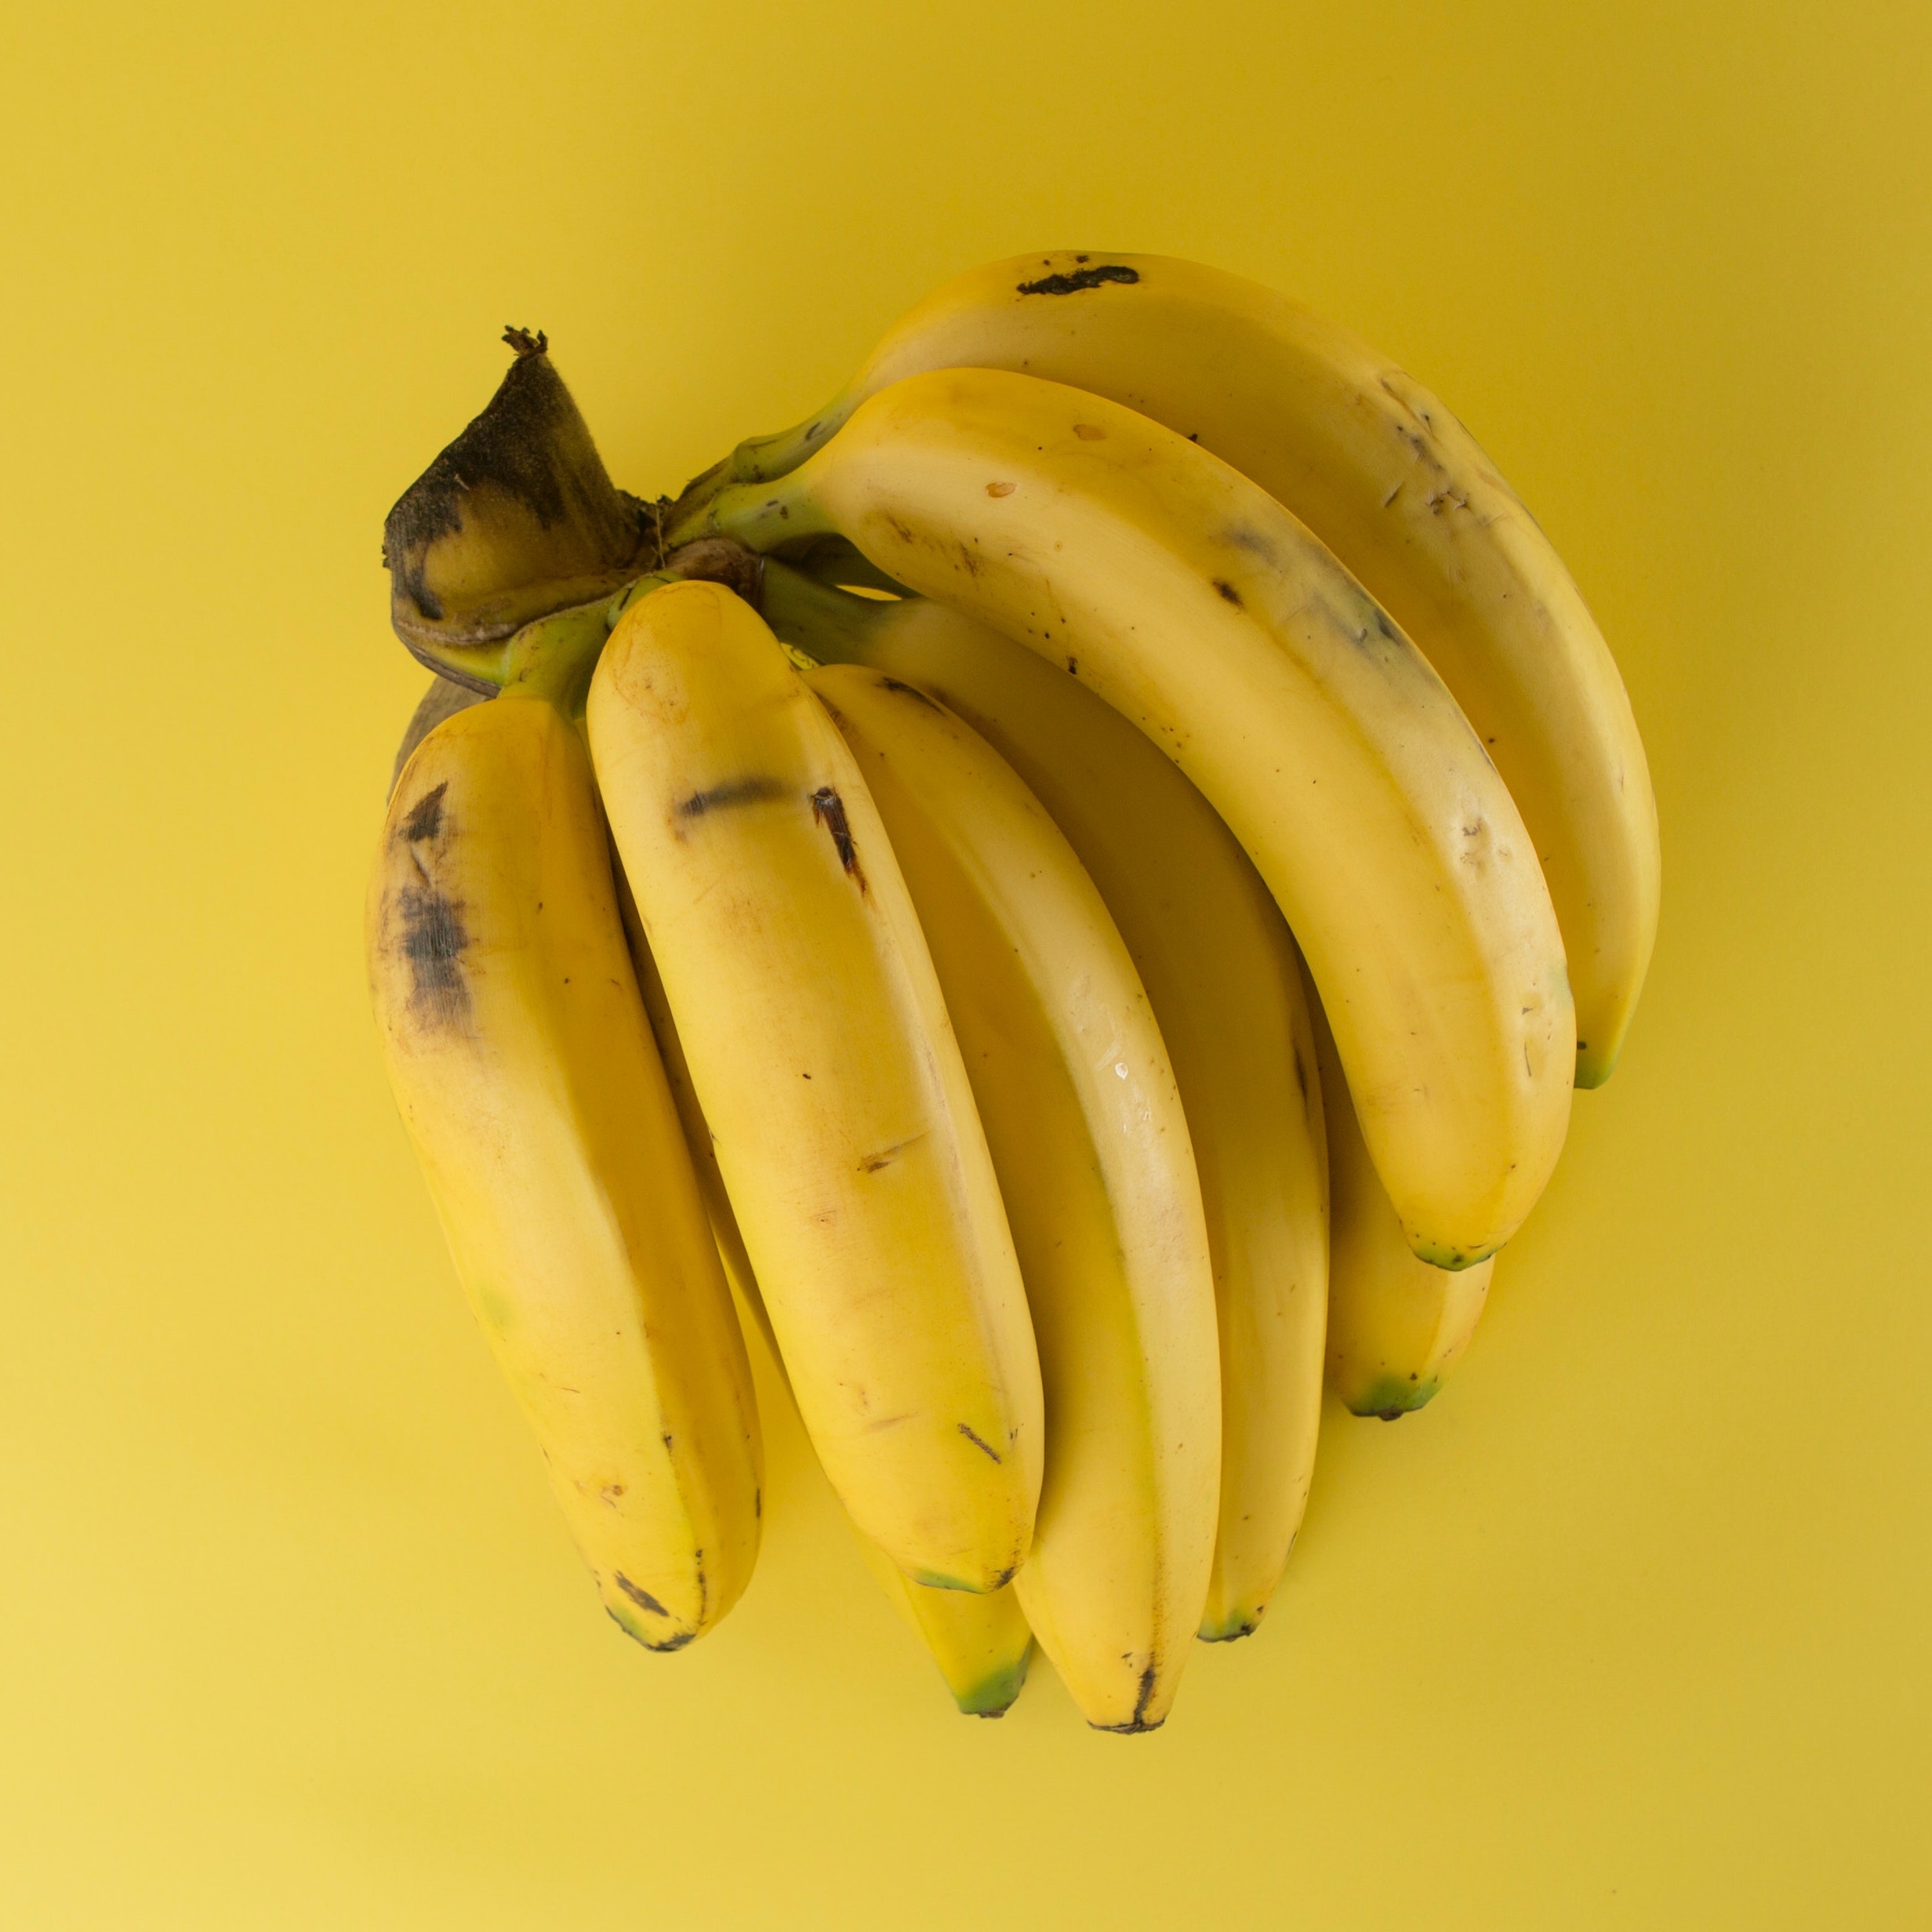 yellow-bananas-61127